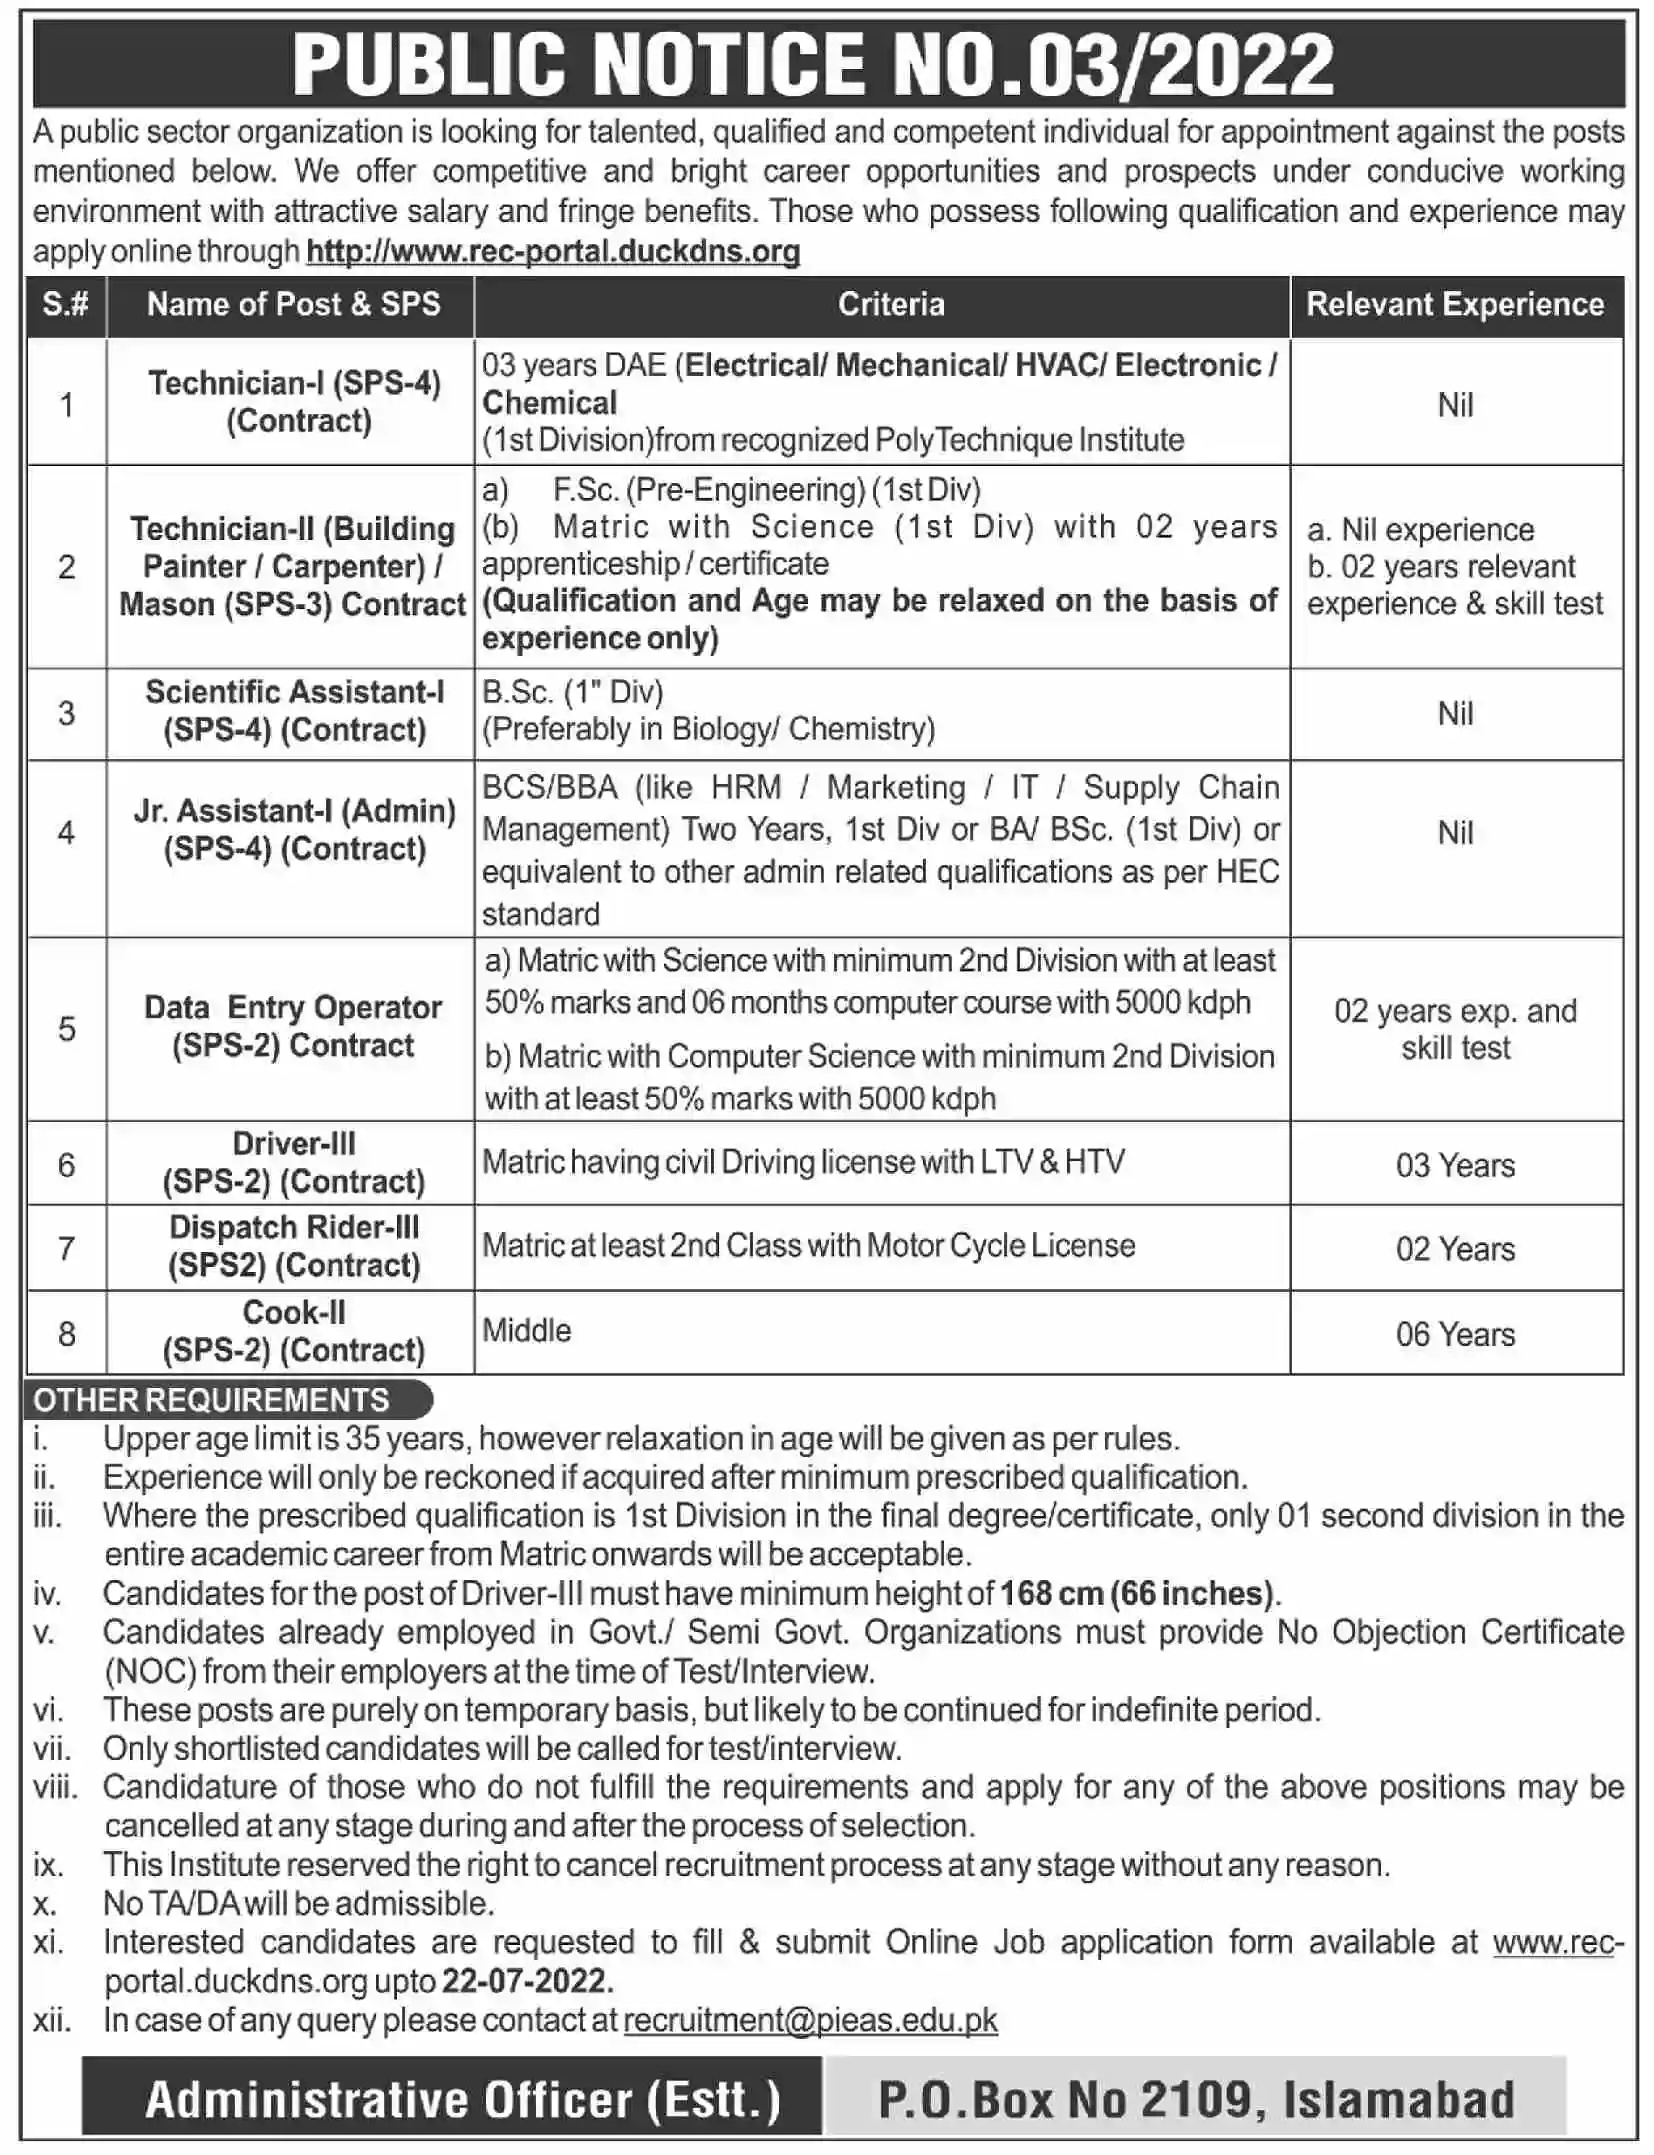 PAEC Jobs 2022 rec-portal.duckdns.org Apply Online PO Box 2109 Islamabad